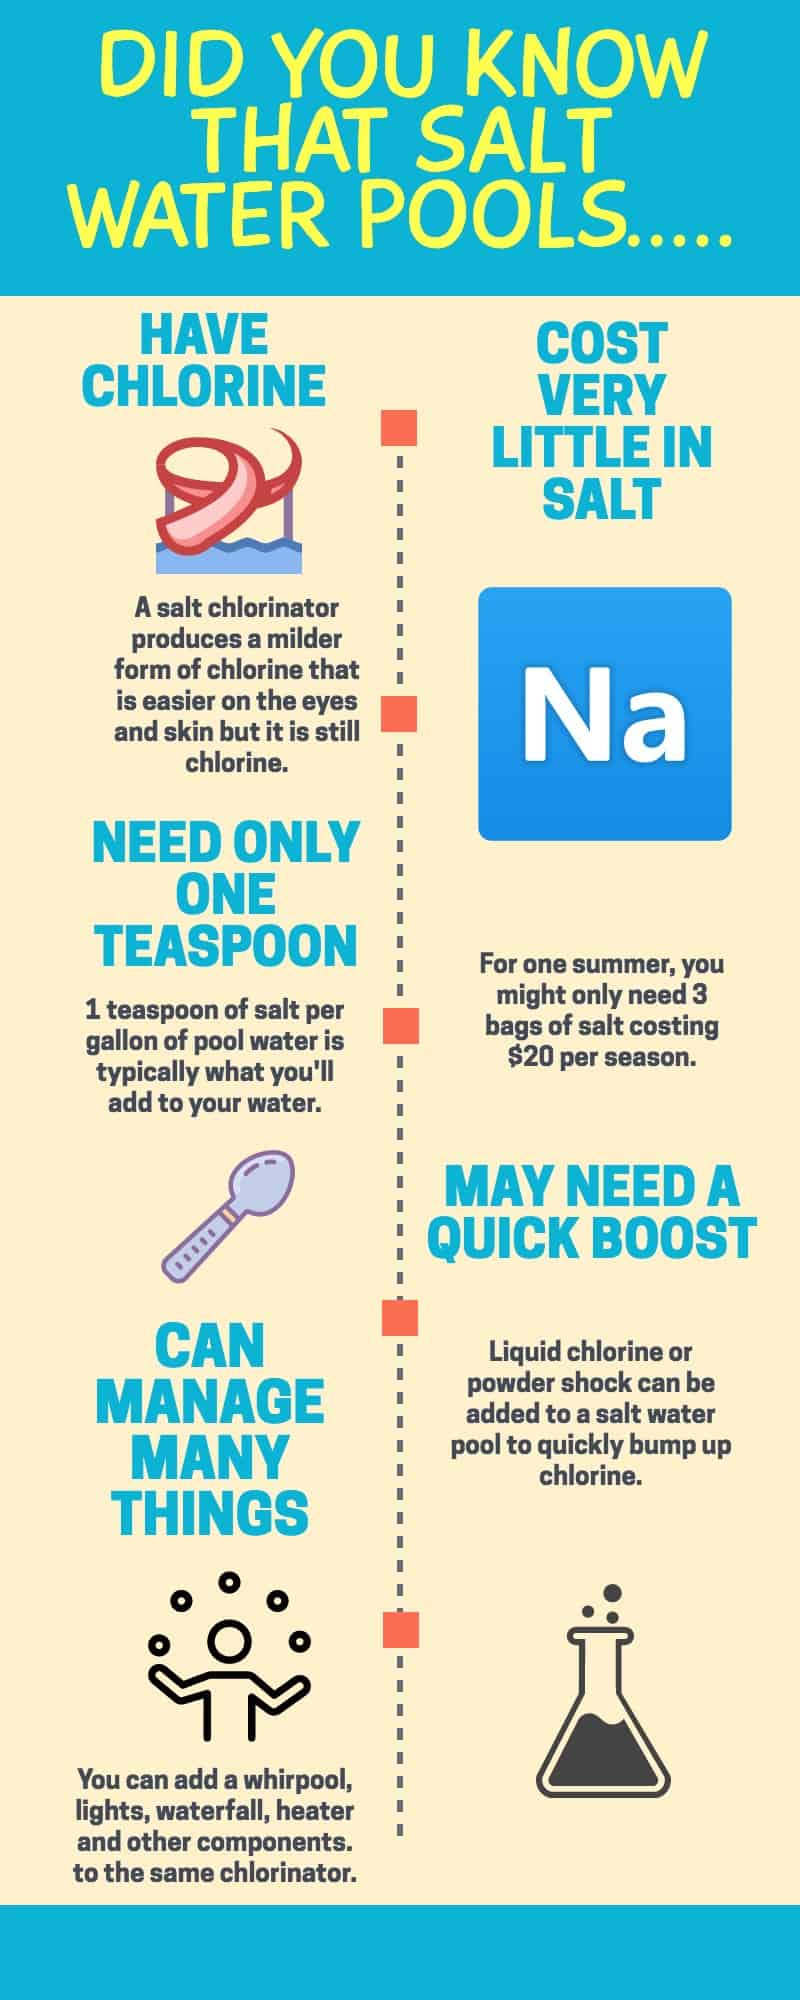 5 important facts regarding salt water pools.